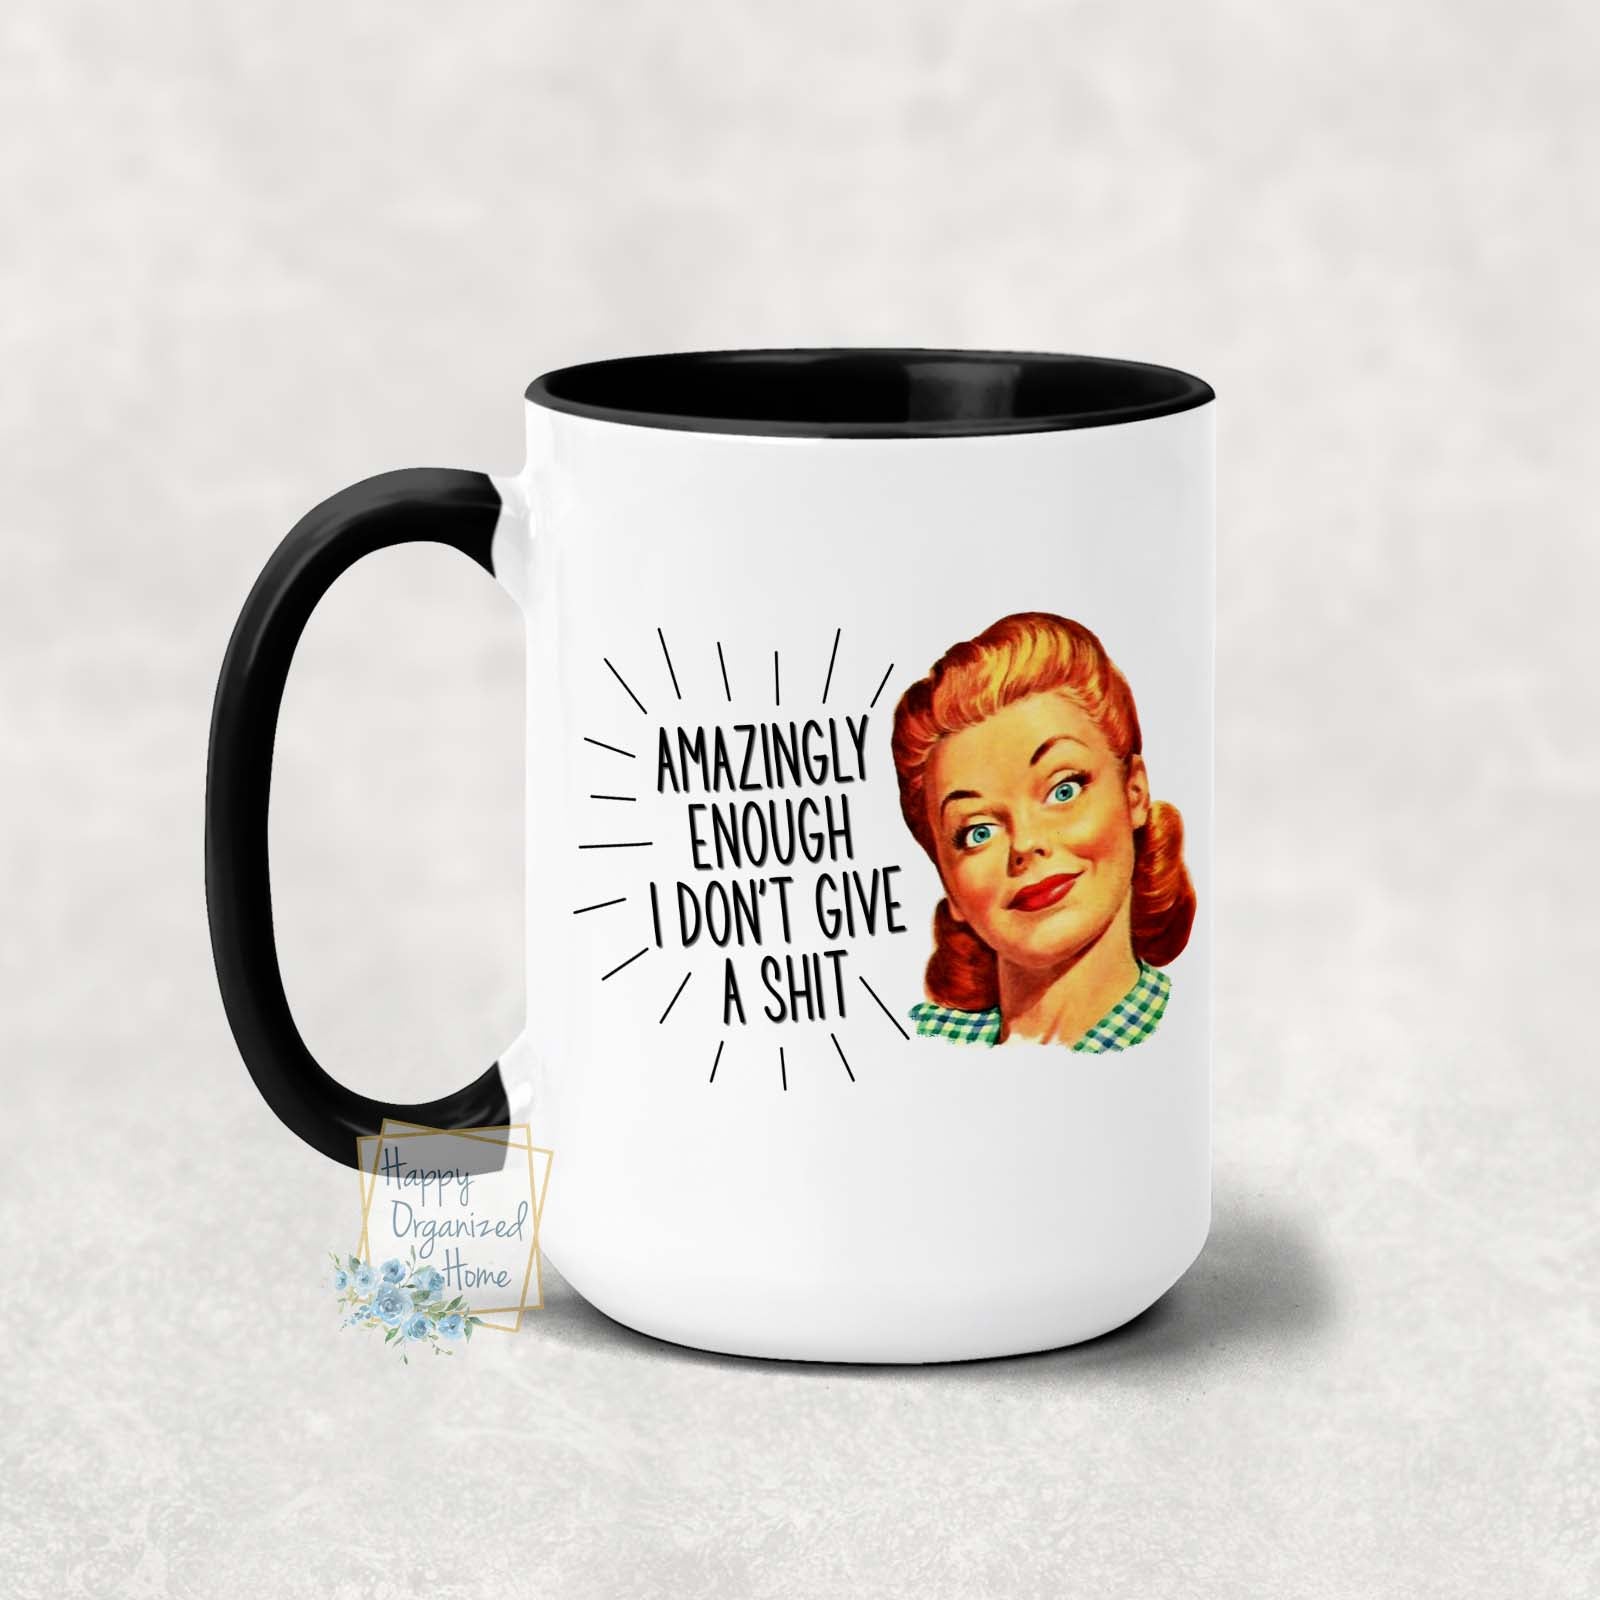 Amazingly enough I Don't give a shit - Coffee Mug  Tea Mug